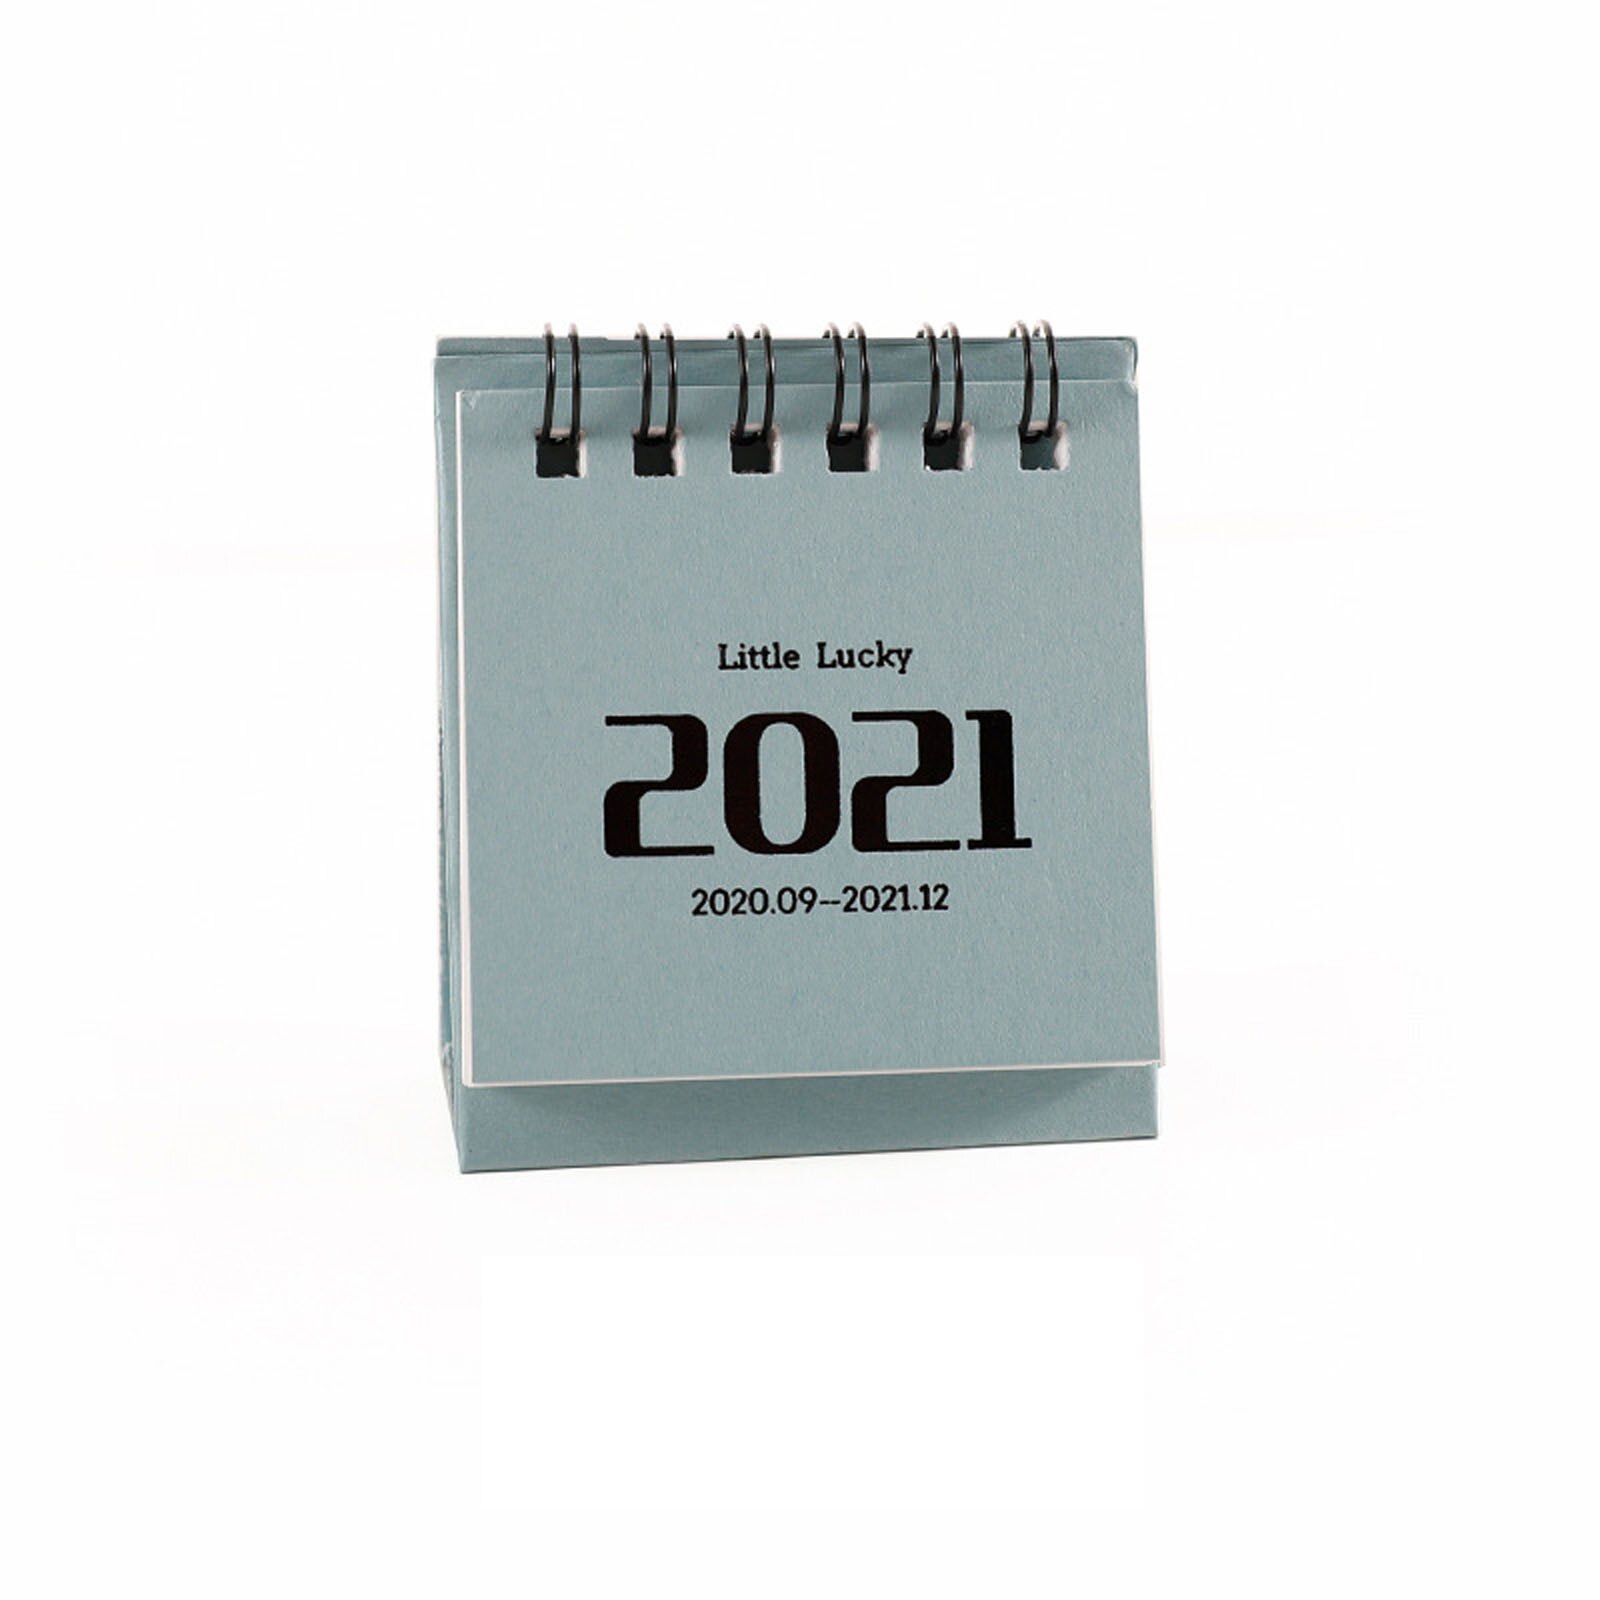 S# Calendar Mini Desk Calendar Stand Up Flip Calendar Daily Monthly Table Planner Calendario Адвент Календарь: A